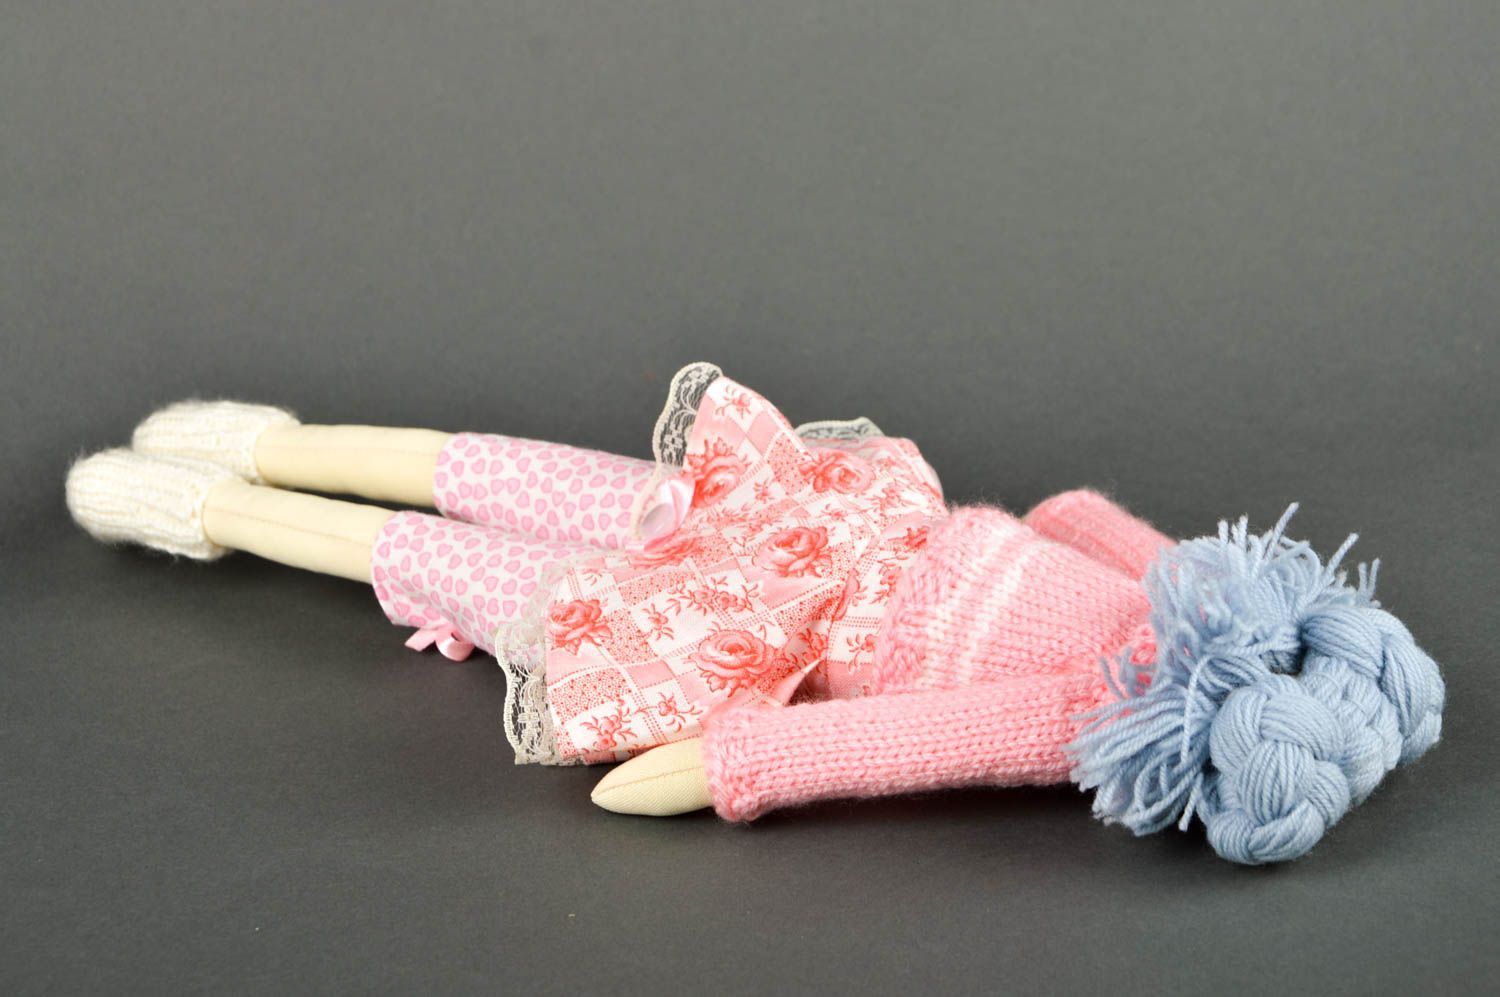 Rag doll handmade fabric toy textile toy for children nursery decor ideas photo 5